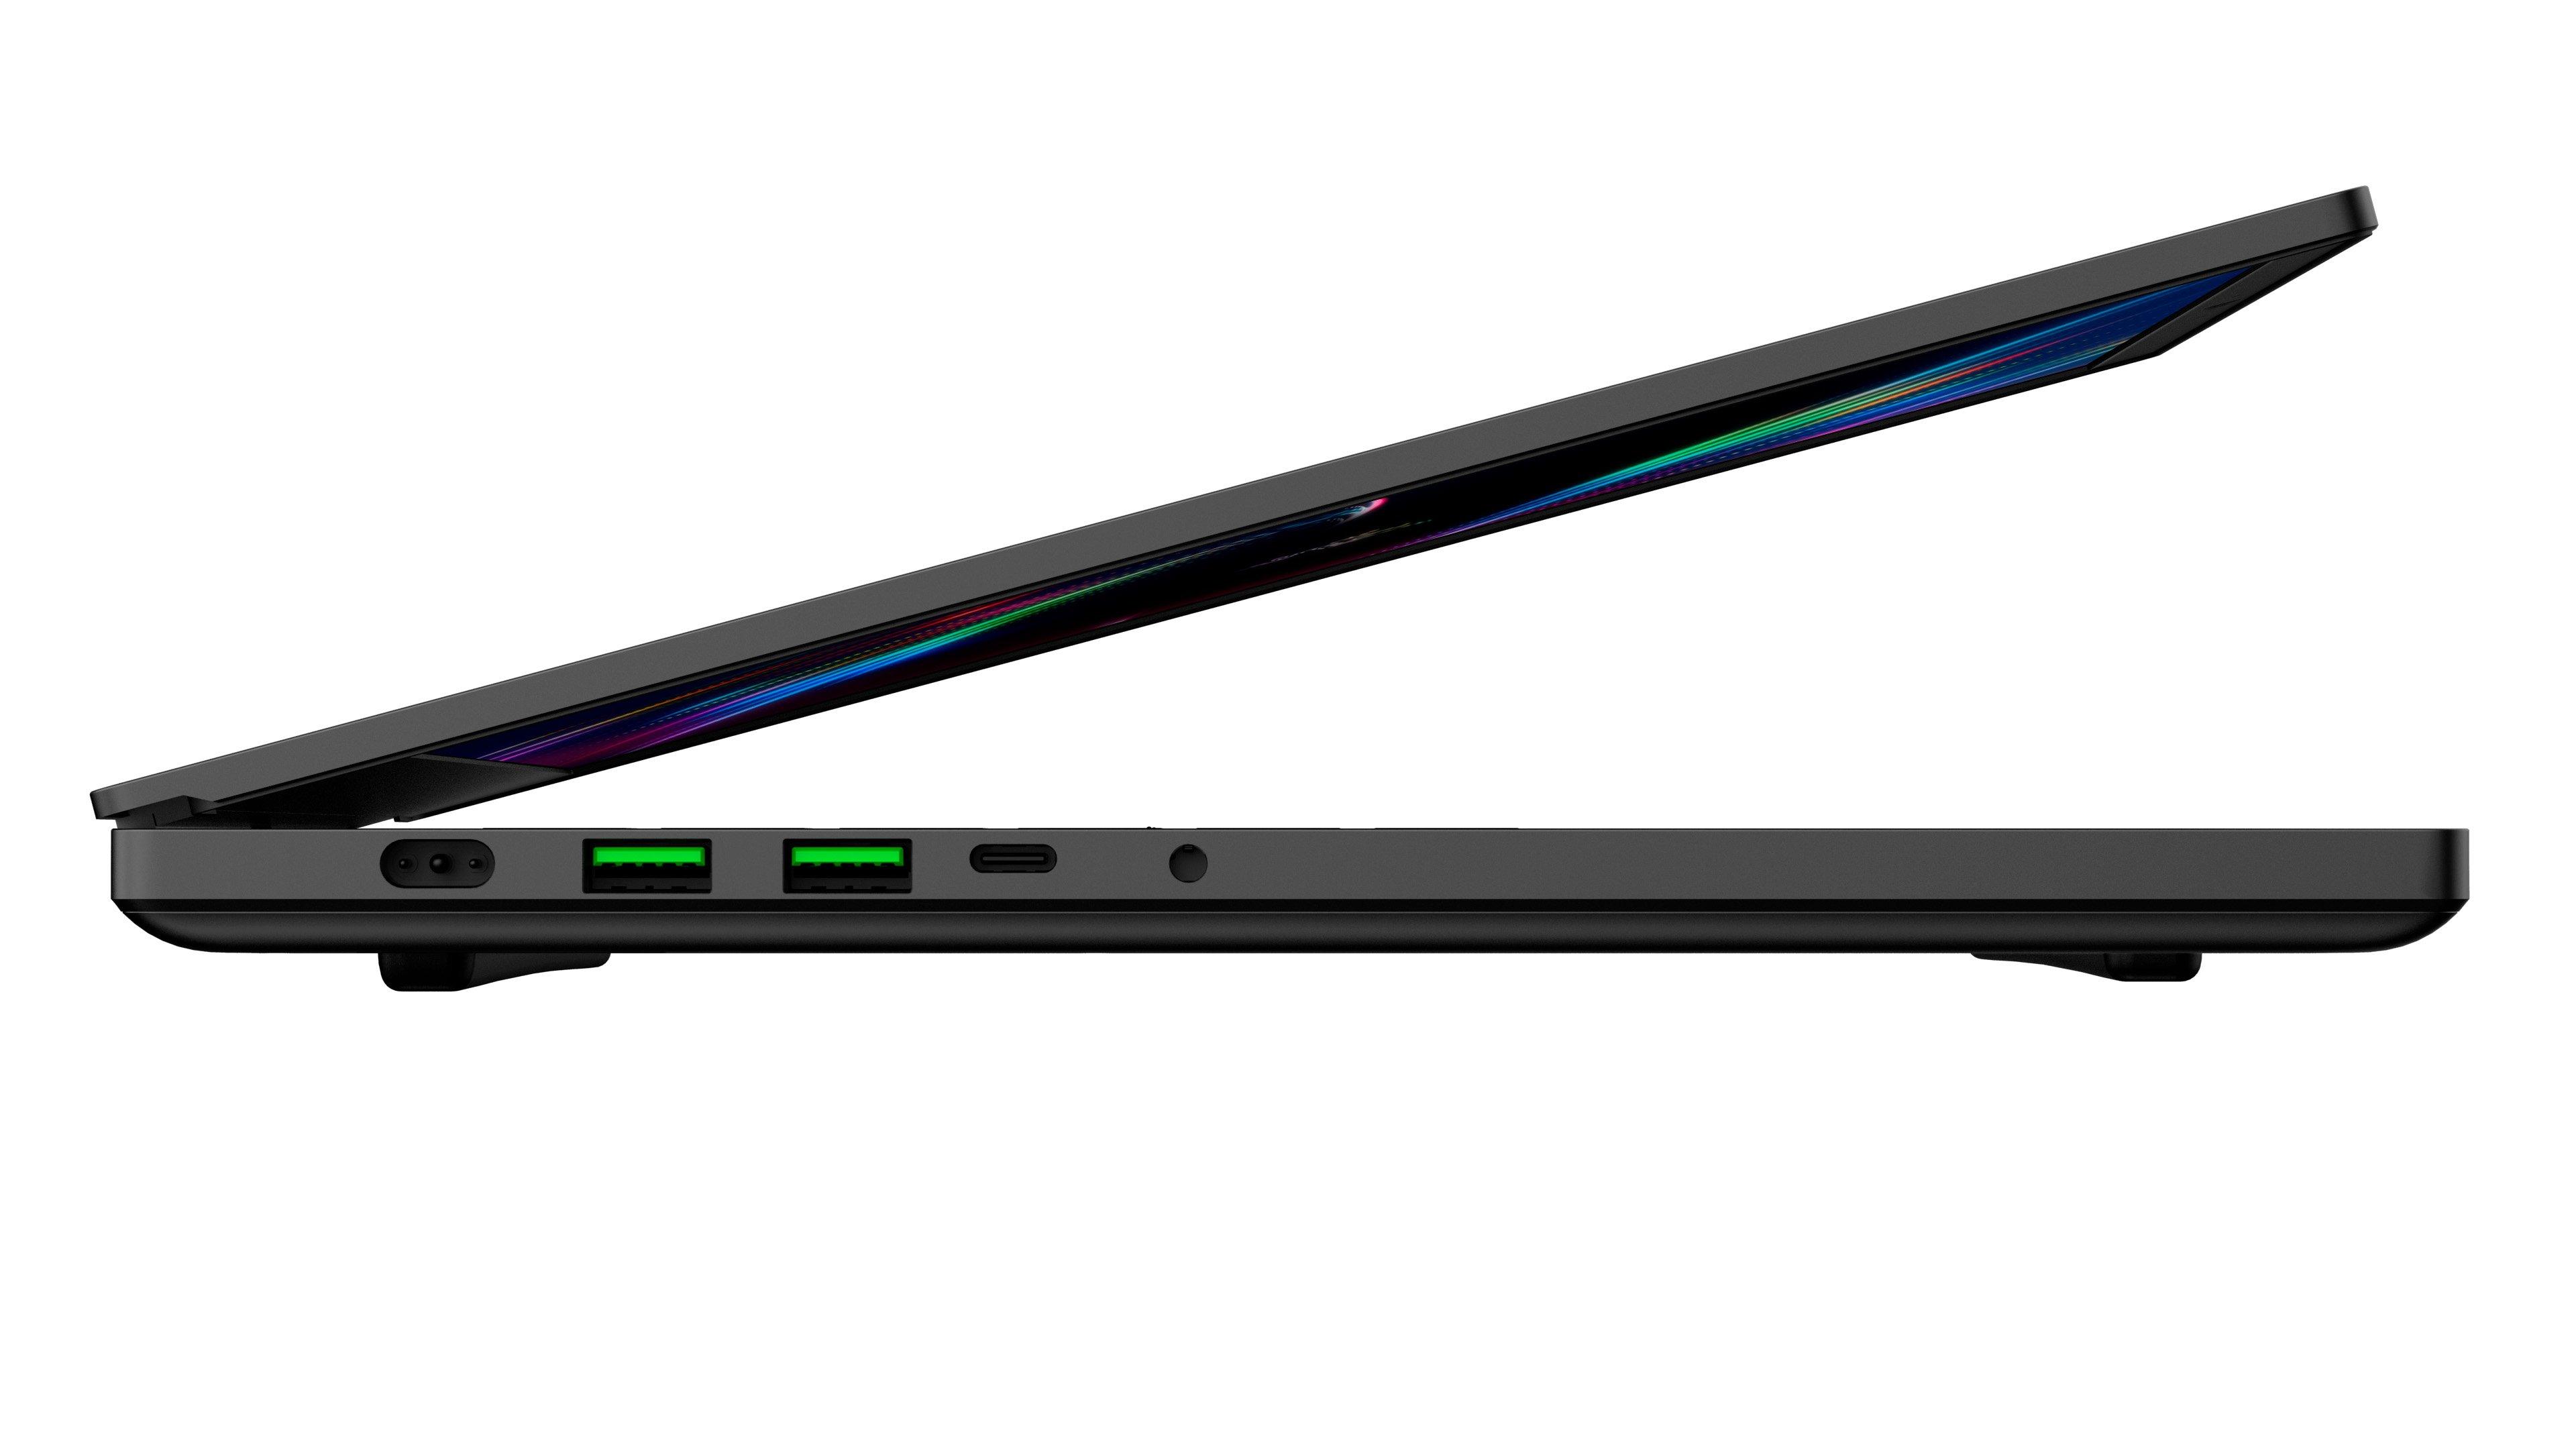 Razer Blade 15 Advanced 4K Touch Screen Intel Core i7 16GB RTX 2080 Super 1TBSSD Gaming Laptop